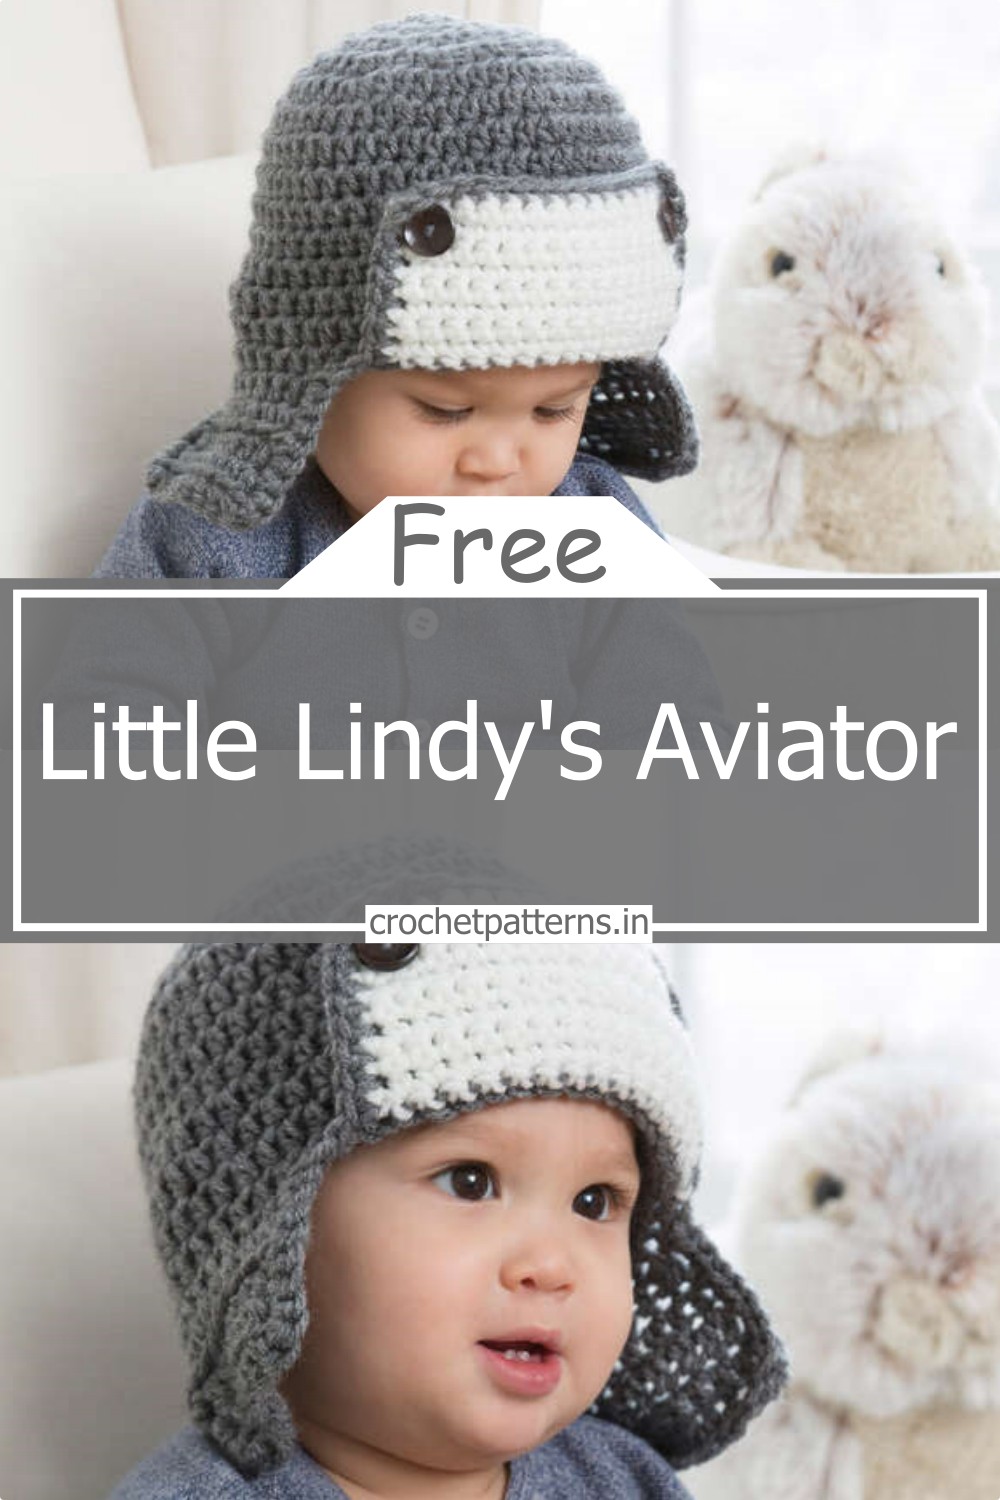 Little Lindy's Aviator